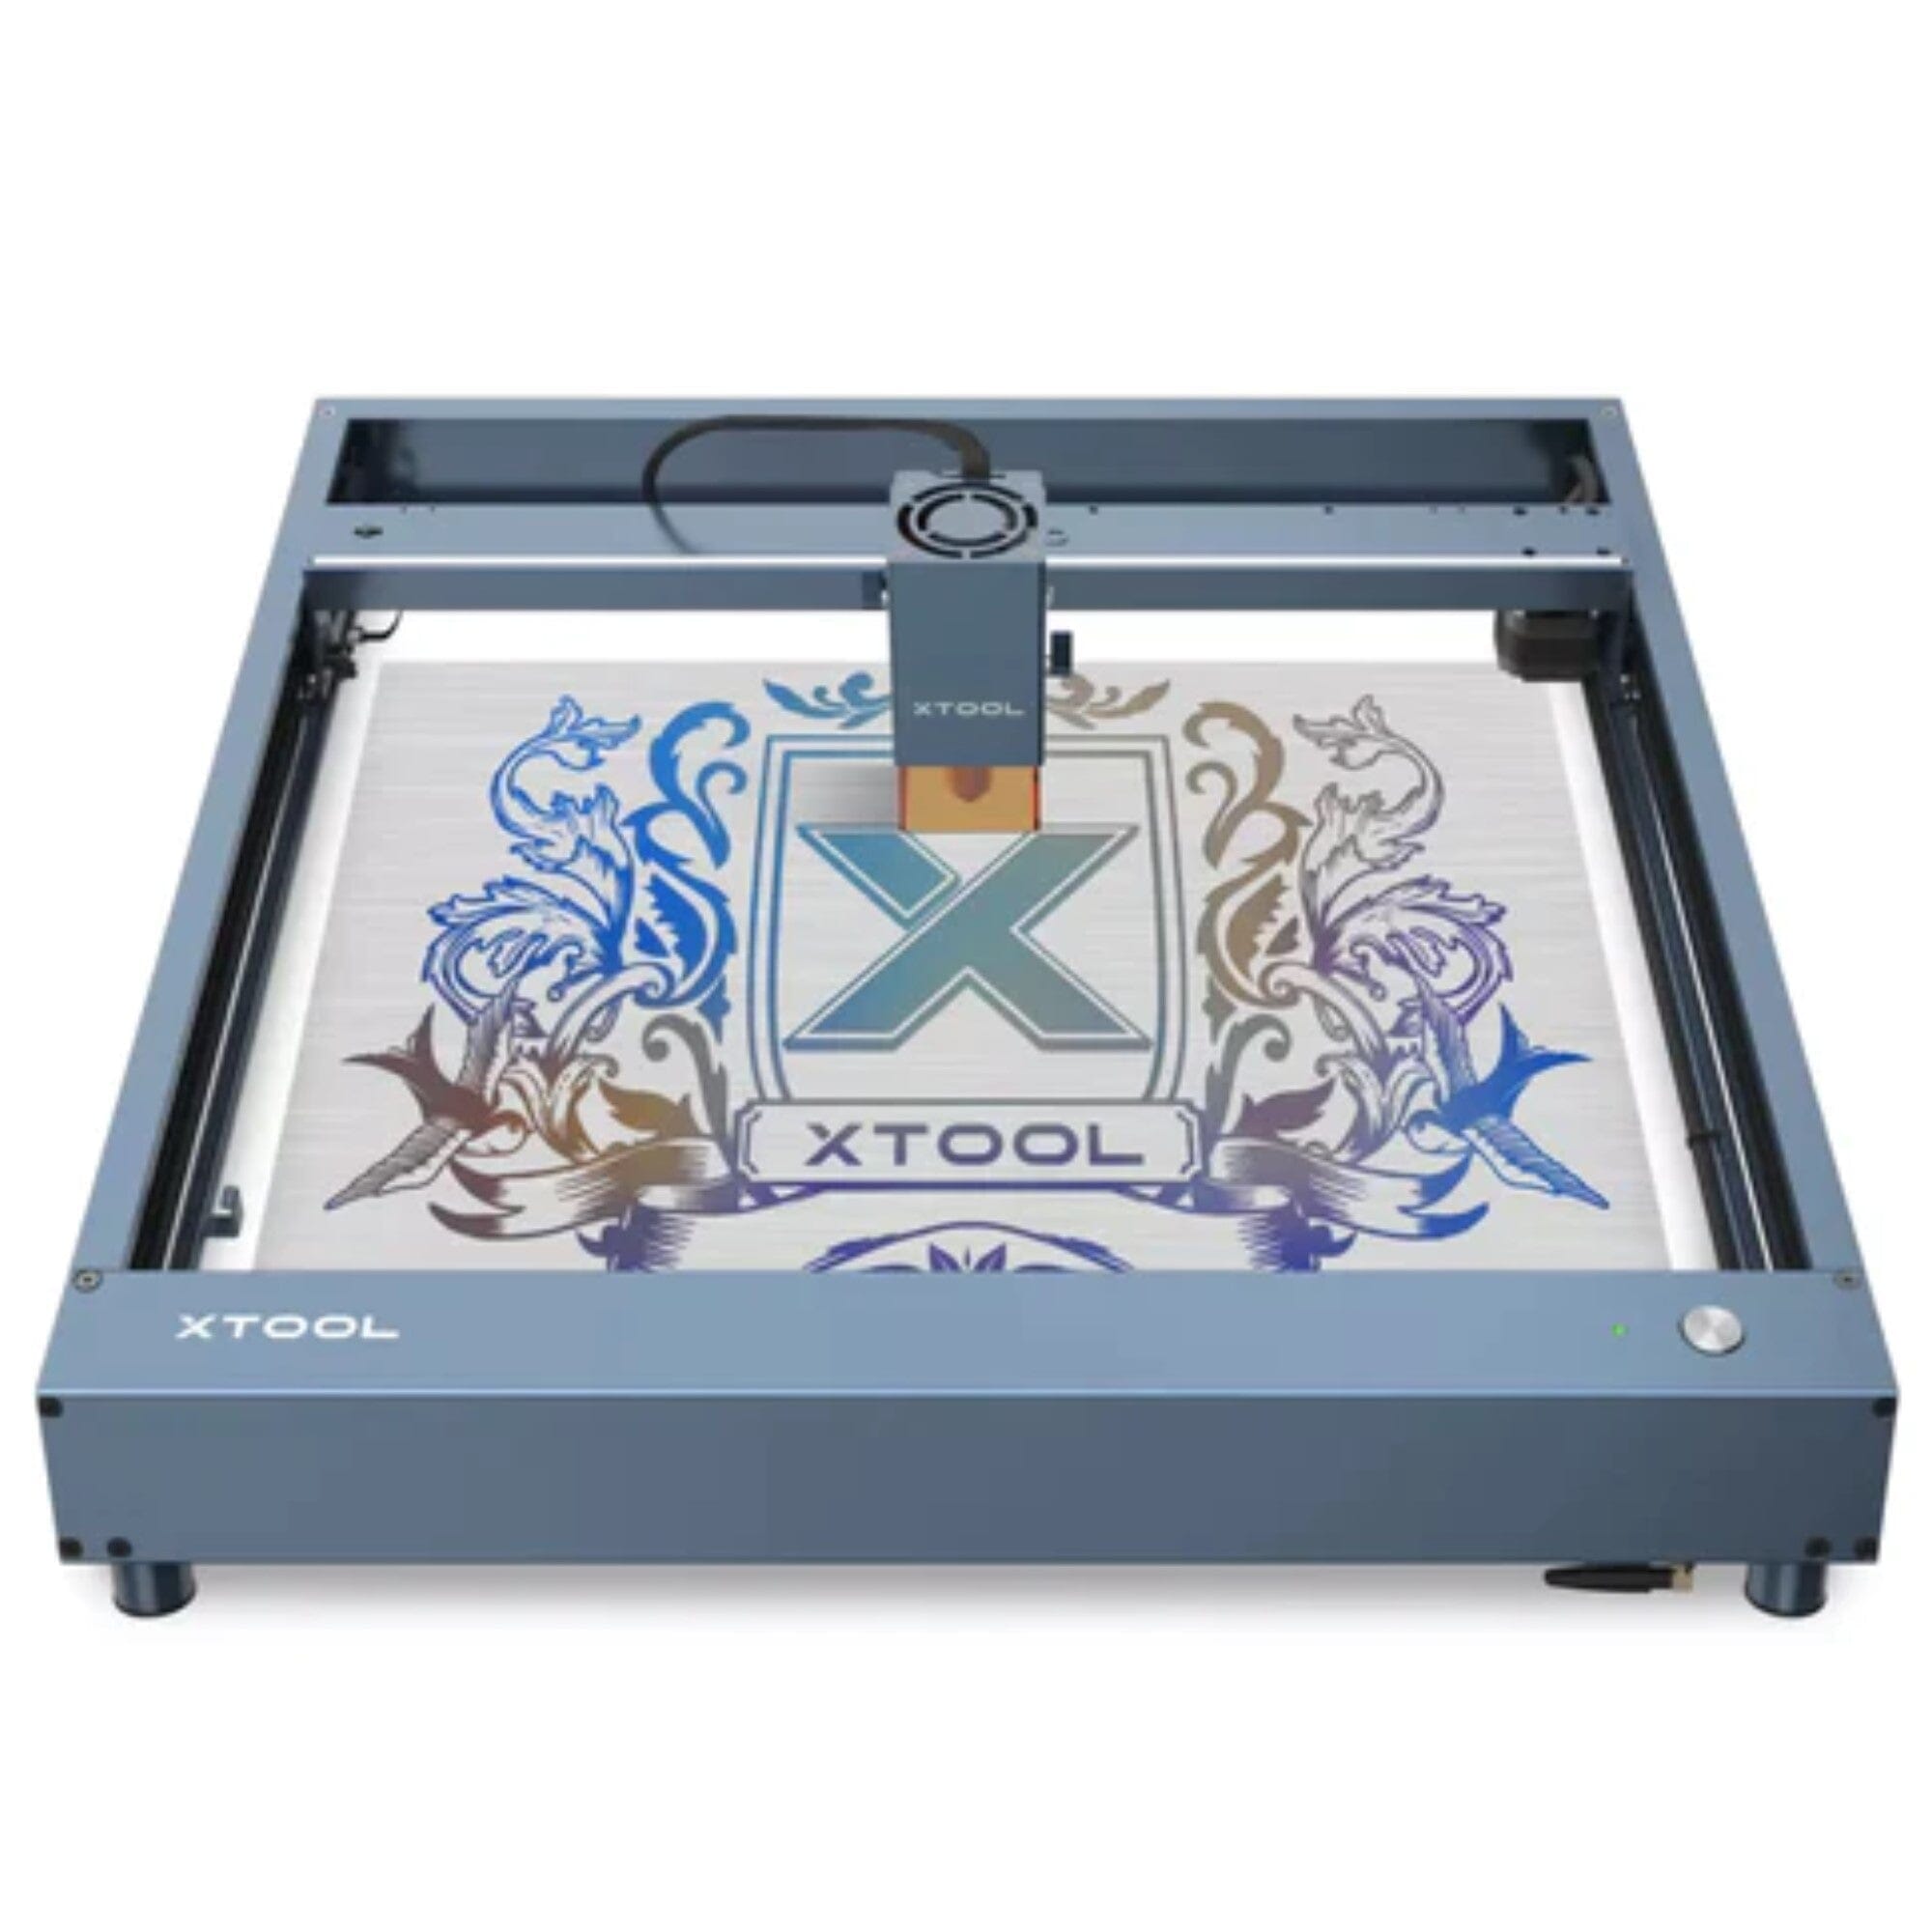 xTool M1 5W Laser Cutter/Engraver